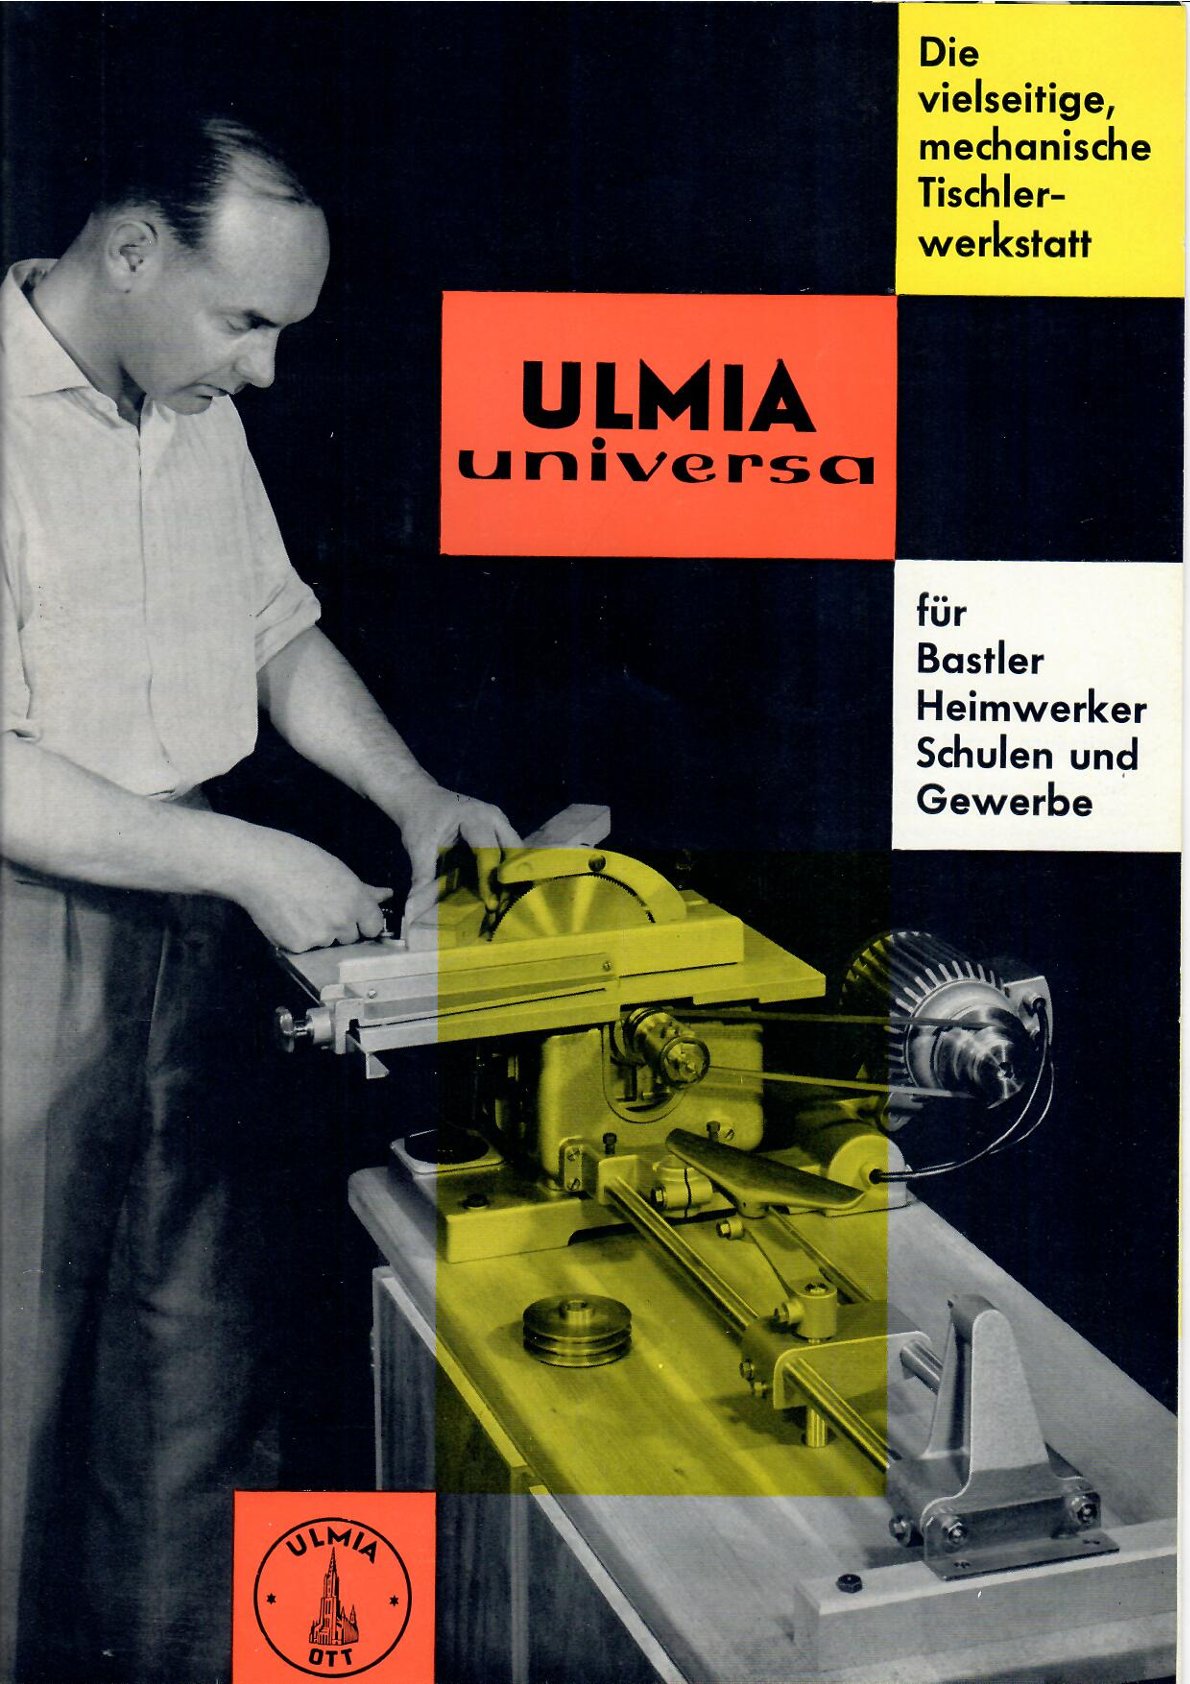 Ulmia Universa Prospekt 1